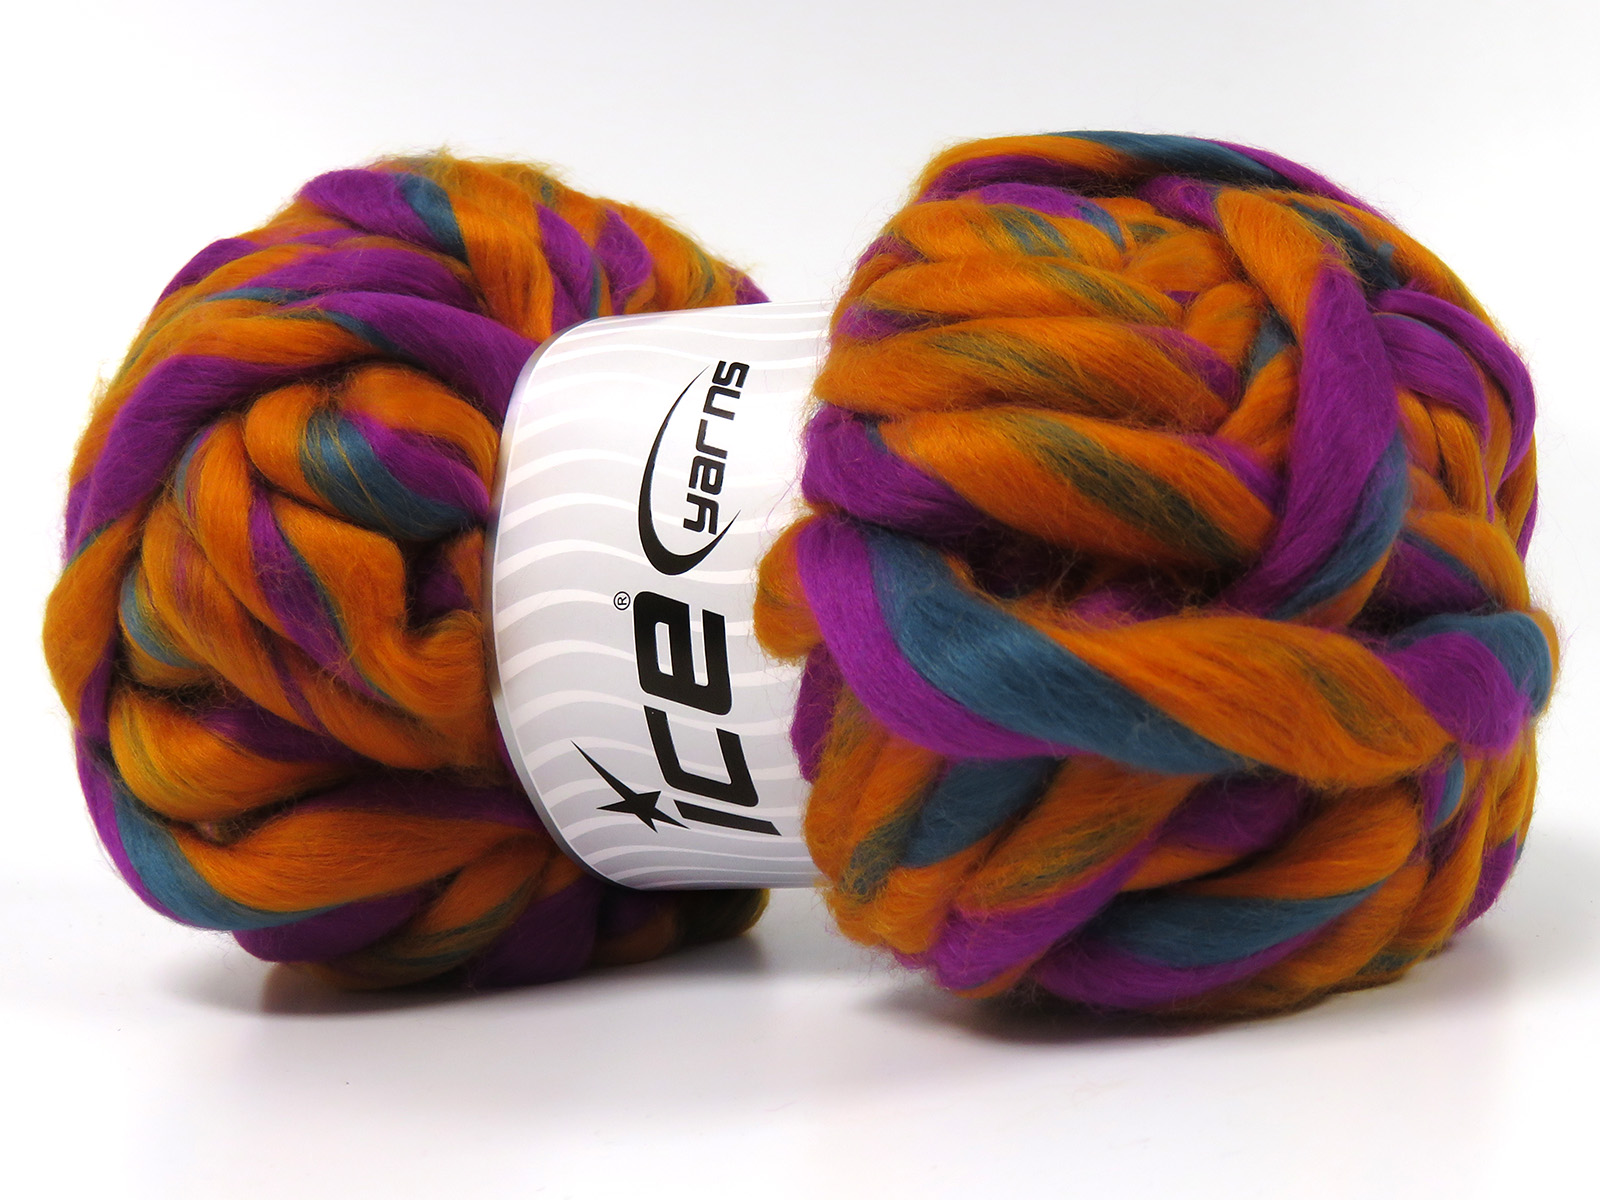 Krilov Gold, Teal, Purple at Ice Yarns Online Yarn Store